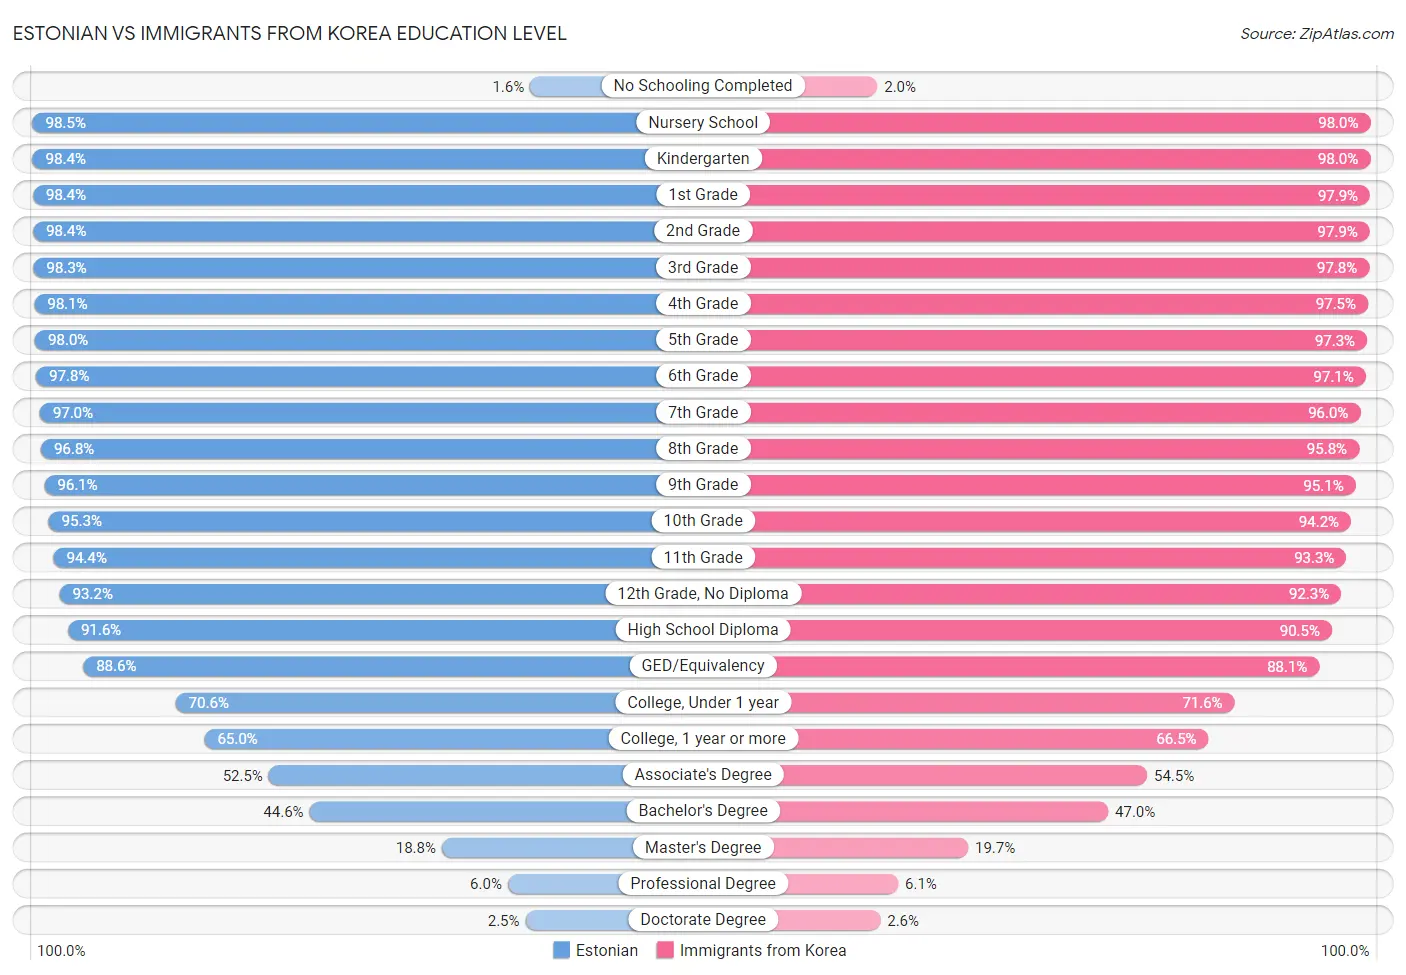 Estonian vs Immigrants from Korea Education Level